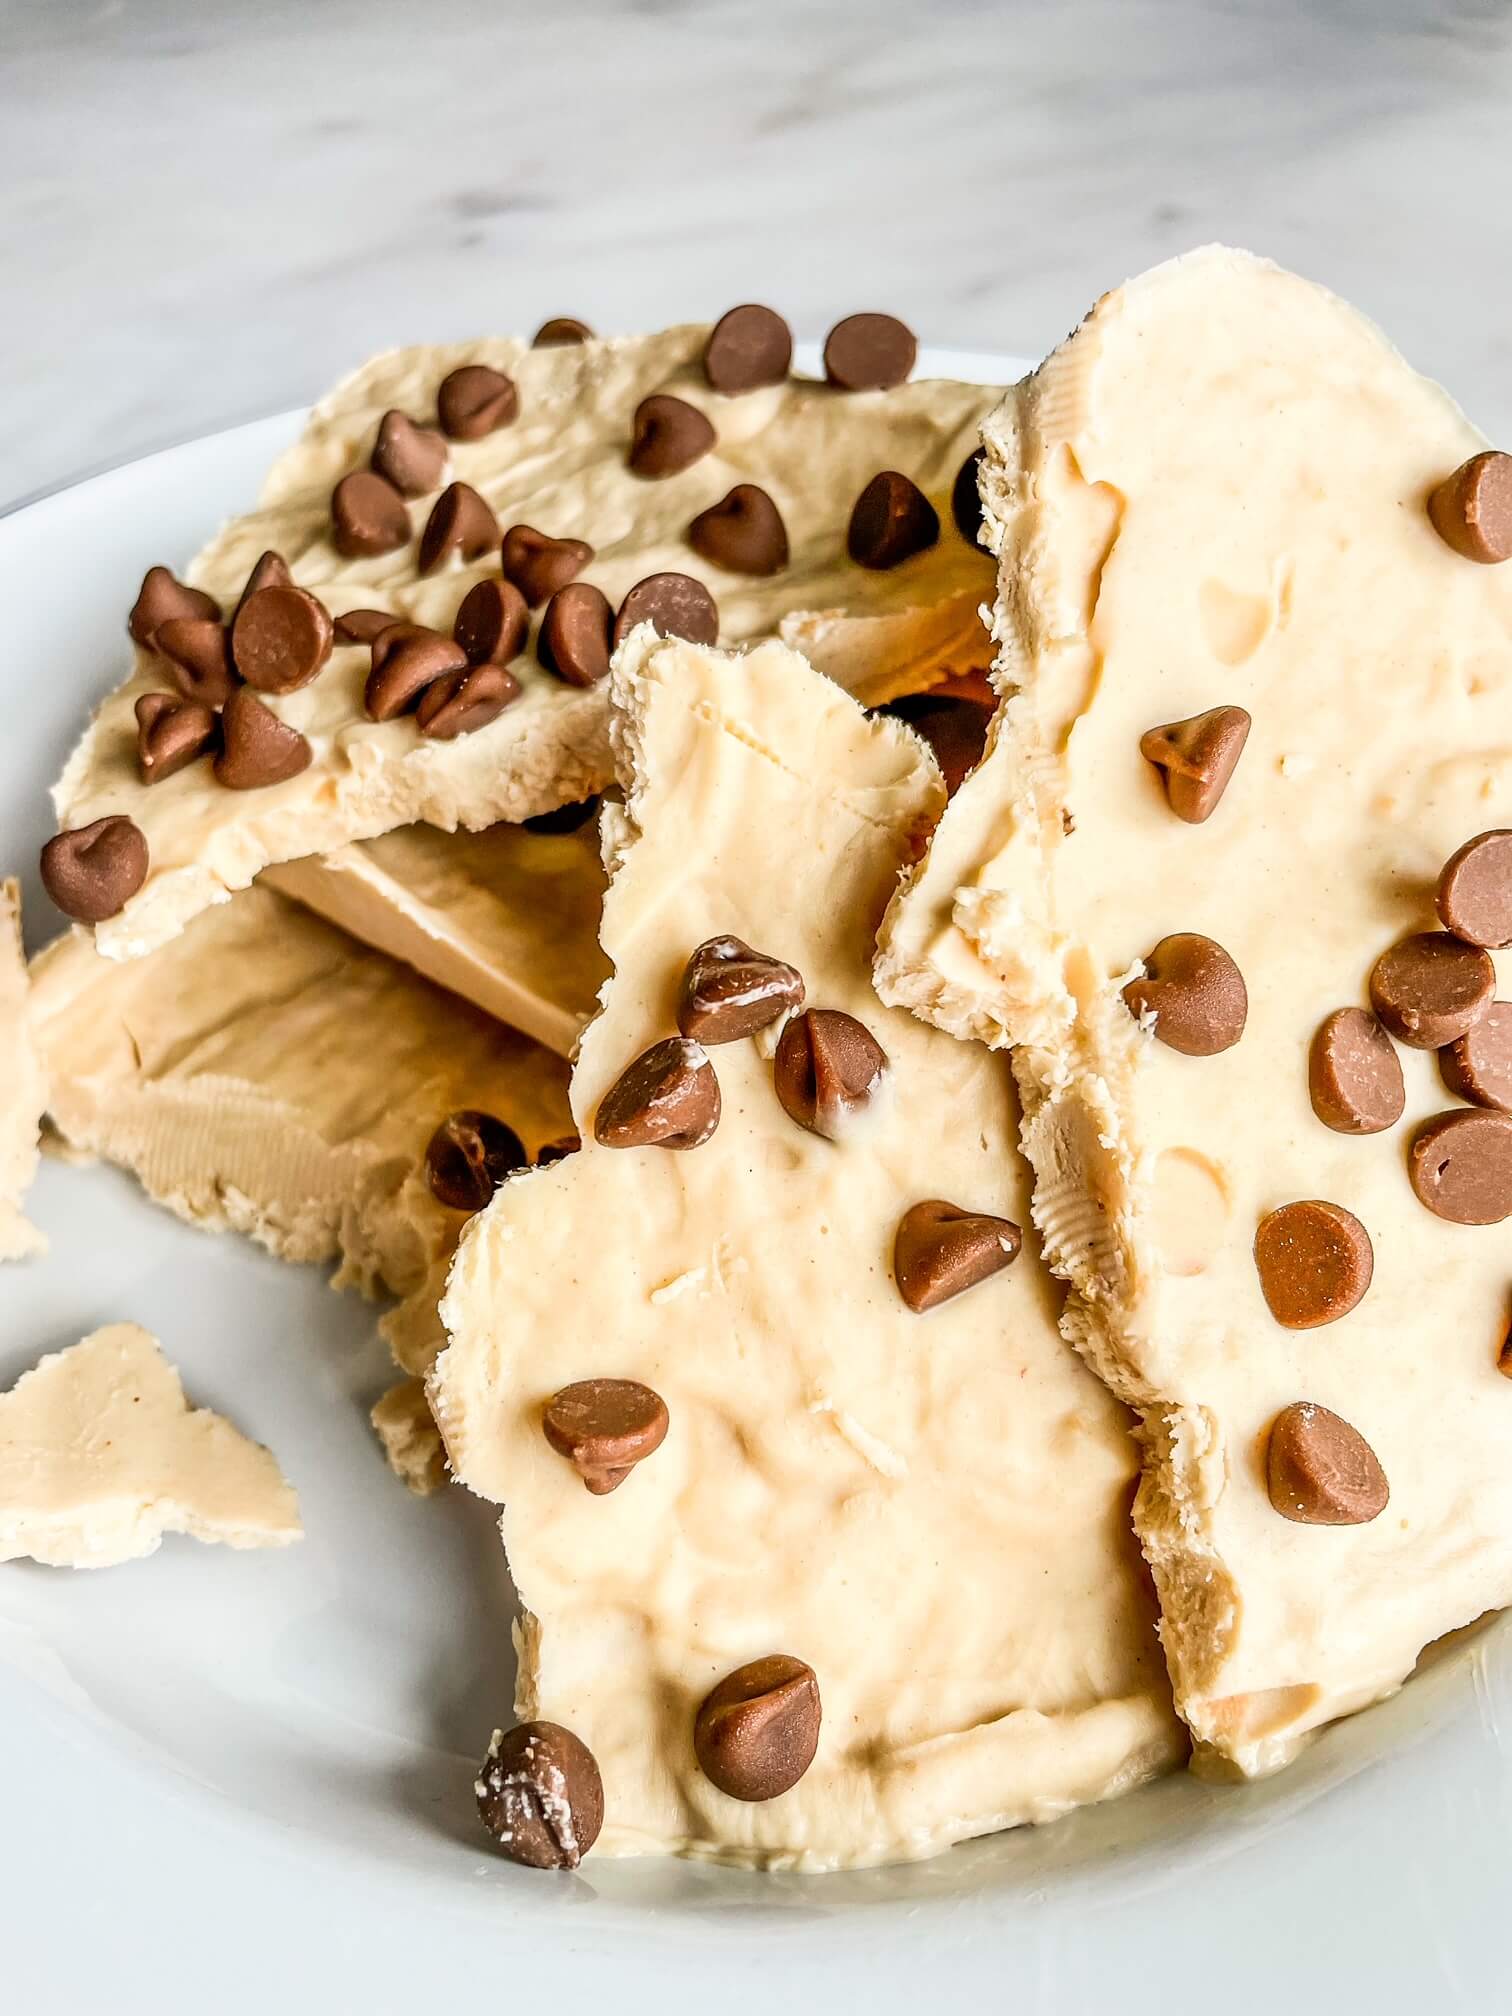 22 Easy Chocolate Peanut Butter Desserts